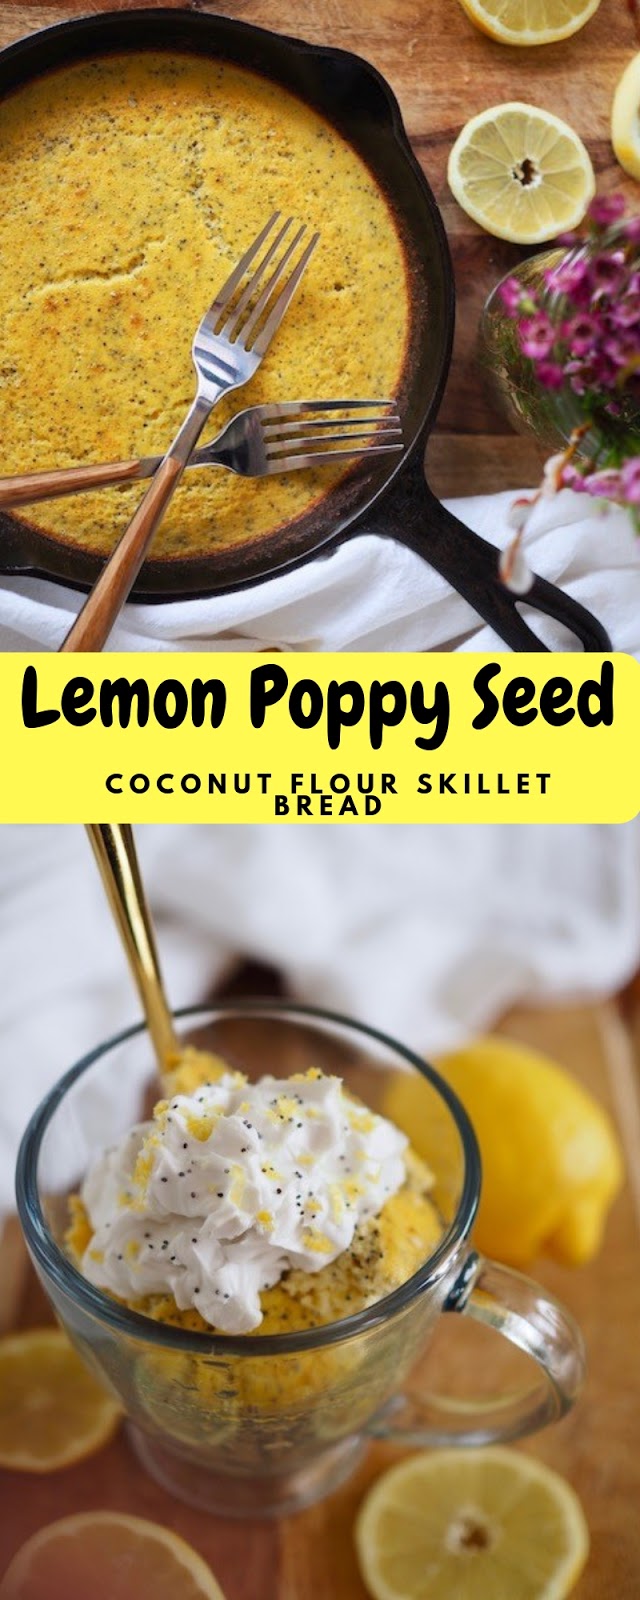 Lemon Poppy Seed Coconut Flour Skillet Bread